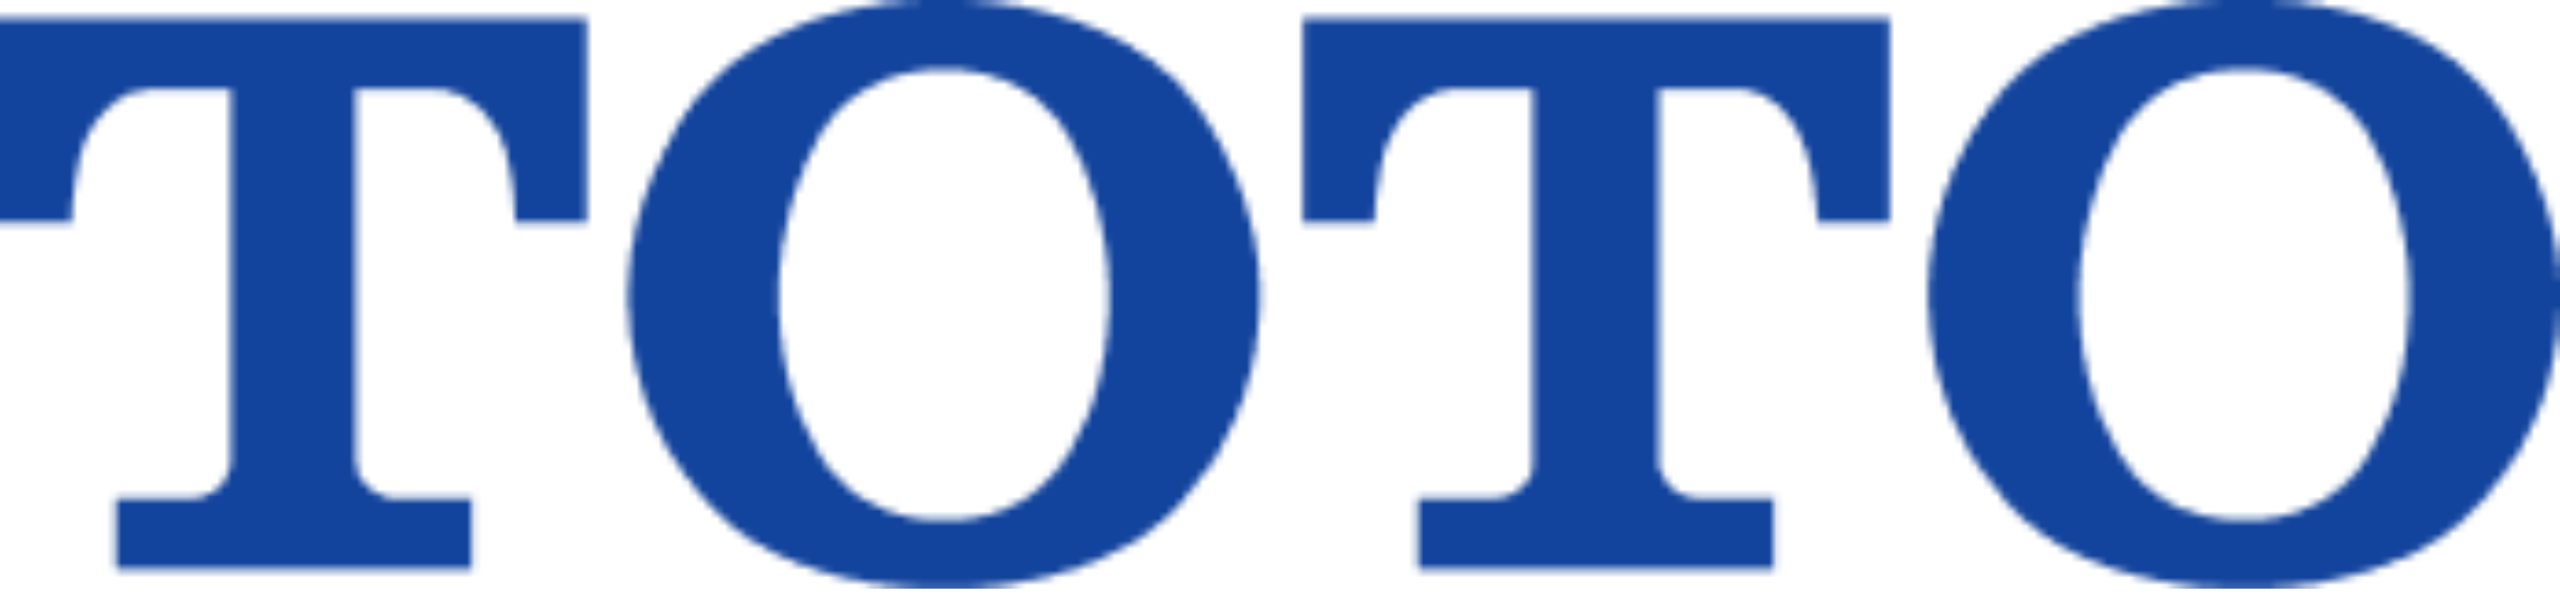 File:TOTO logo.svg - Wikimedia Commons